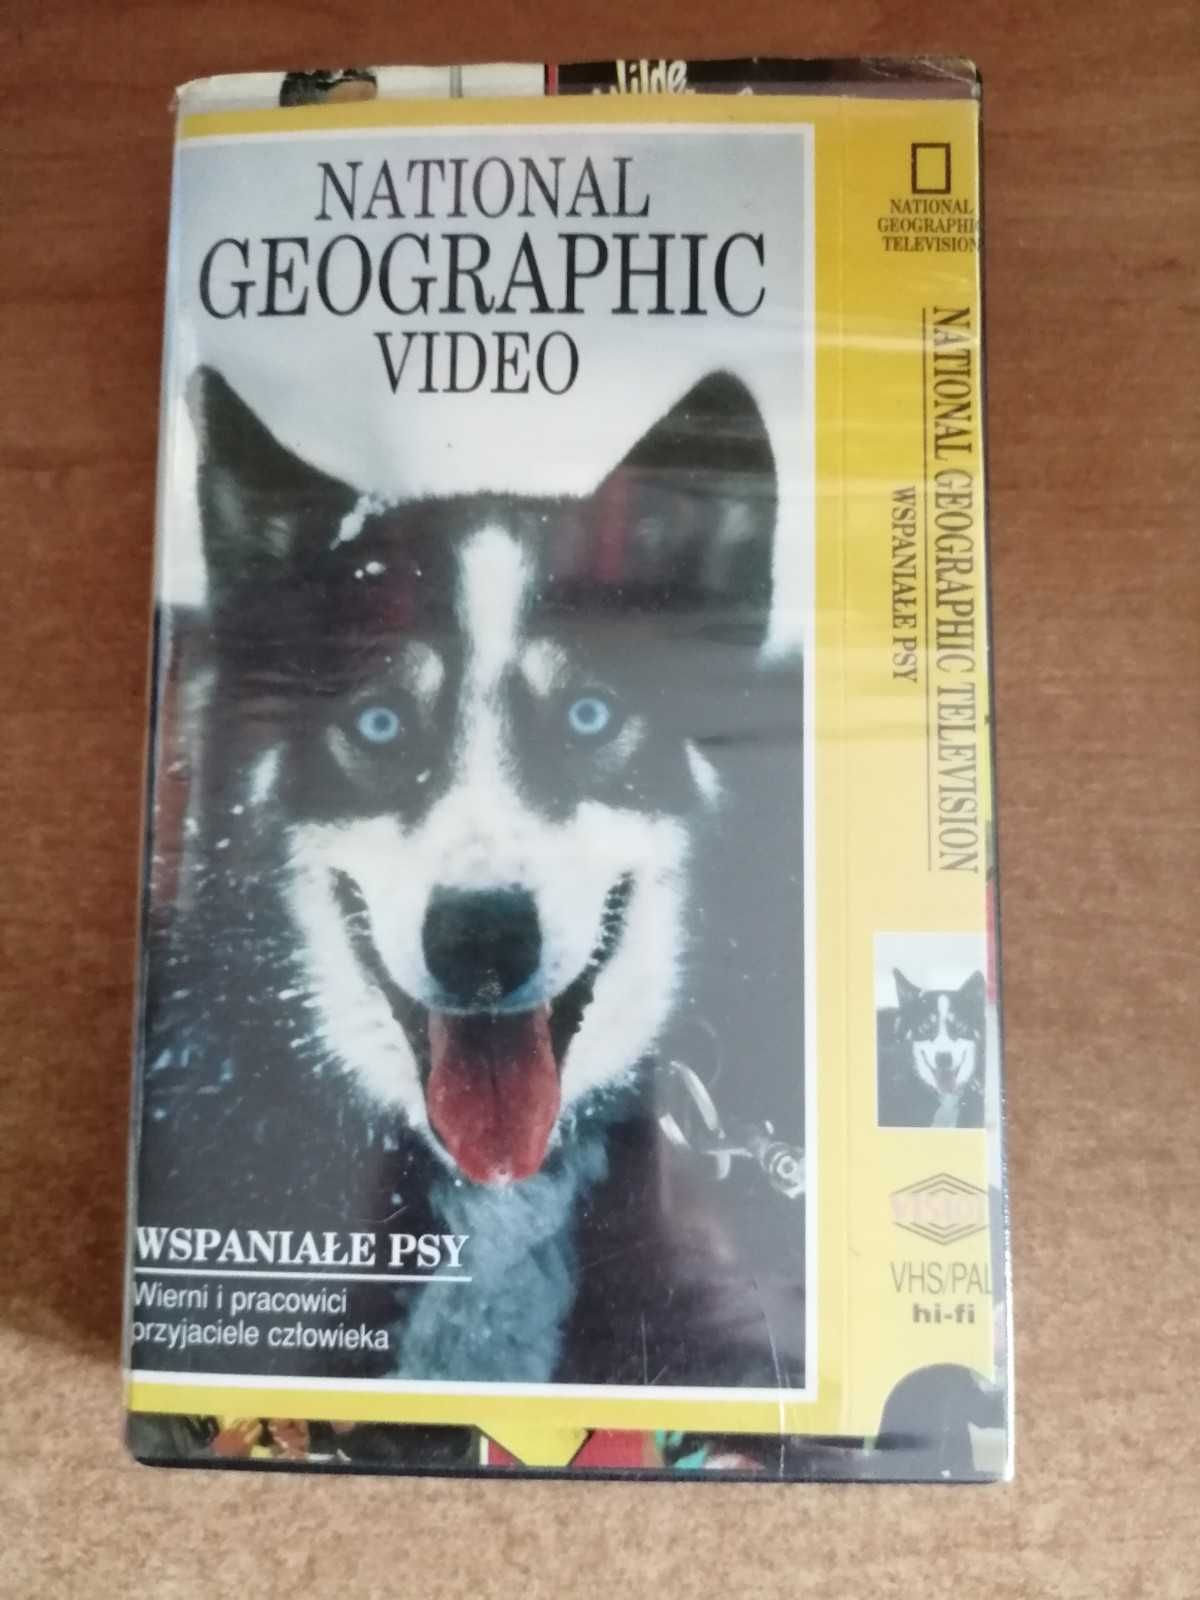 Wspaniałe psy – National Geographic Video